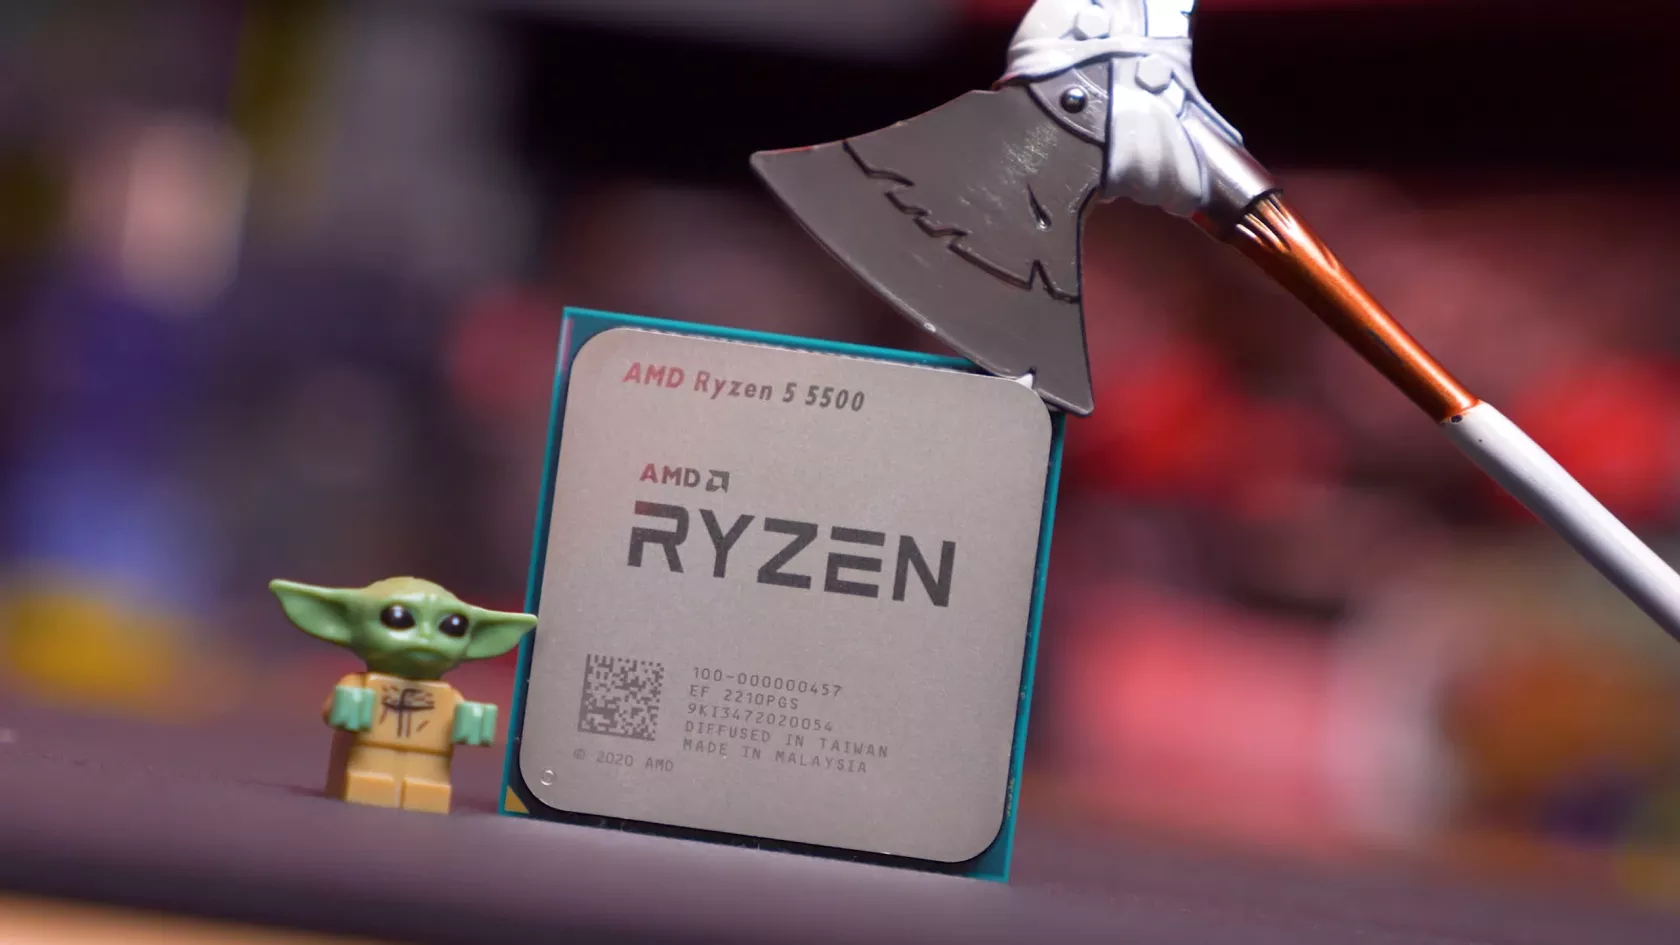 AMD Ryzen 5 5500 Unboxing - Pre Applied Thermal Paste? 